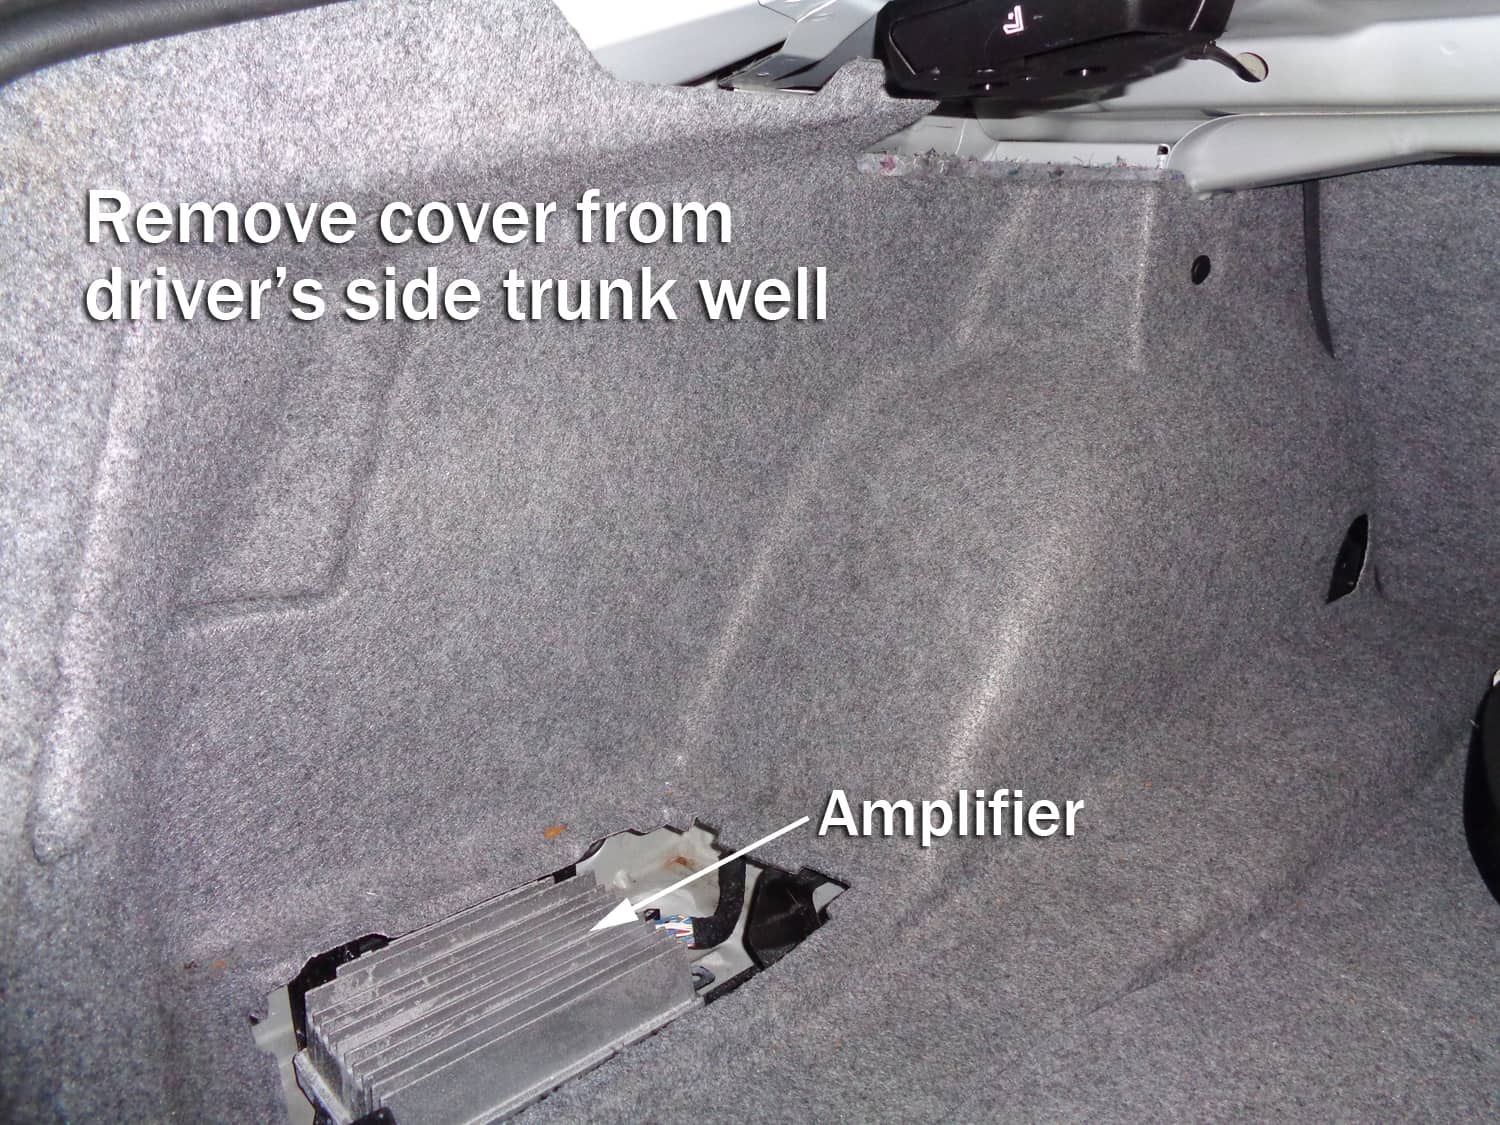 bmw e90 amplifier water damage repair - amplifier location in trunk